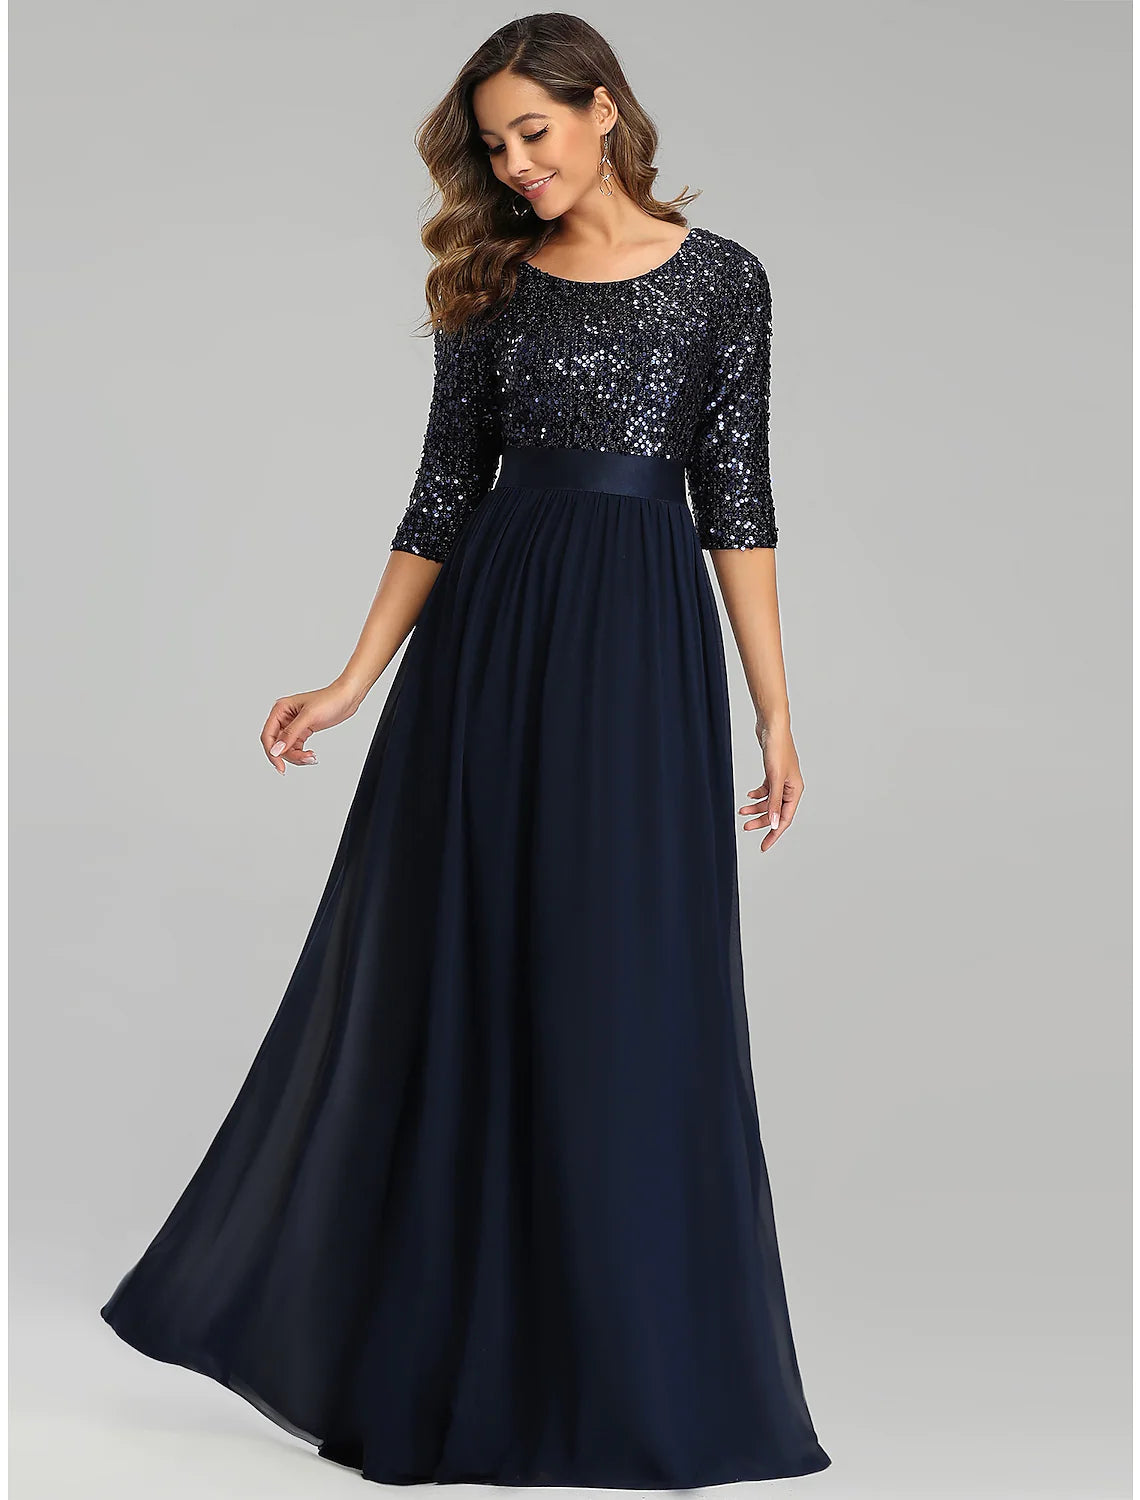 A-Line Elegant Wedding Guest Formal Evening Dress Jewel Neck 3/4 Length Sleeve Floor Length Tulle with Sequin